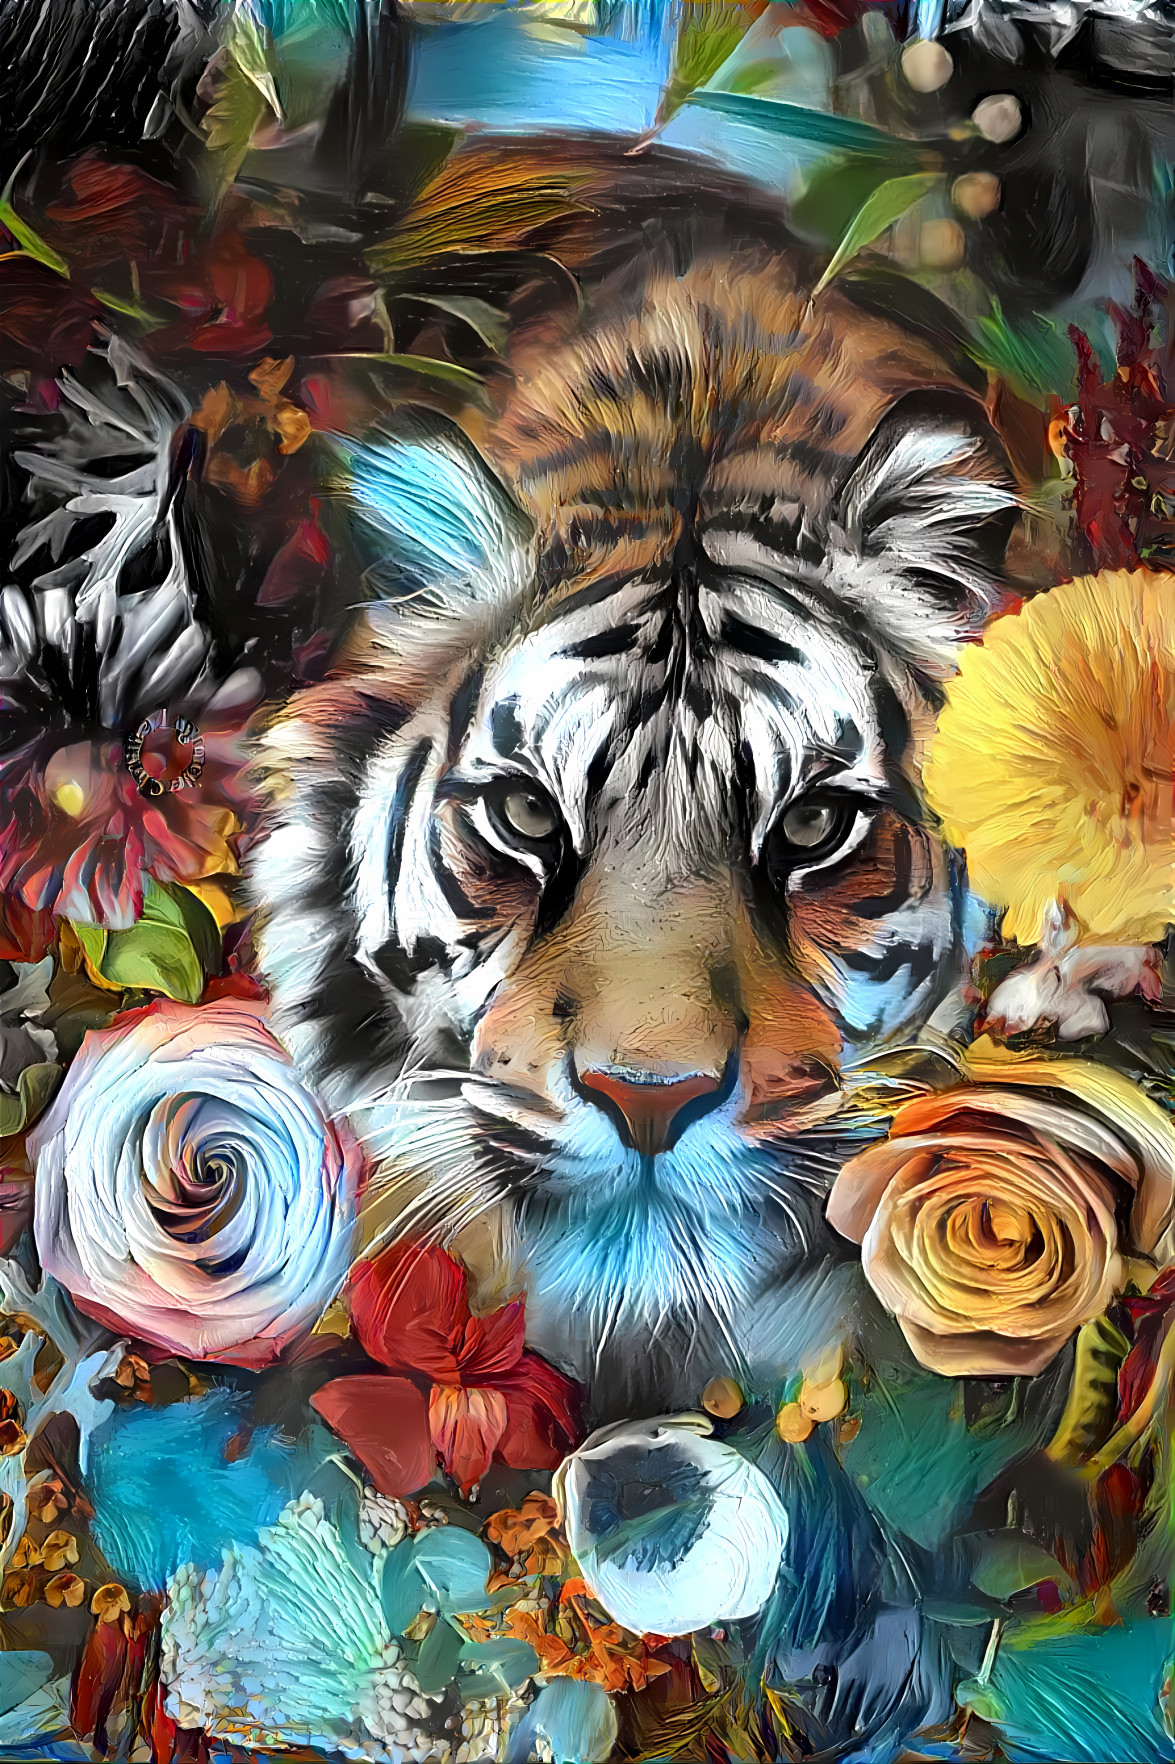 Tiger Flowers